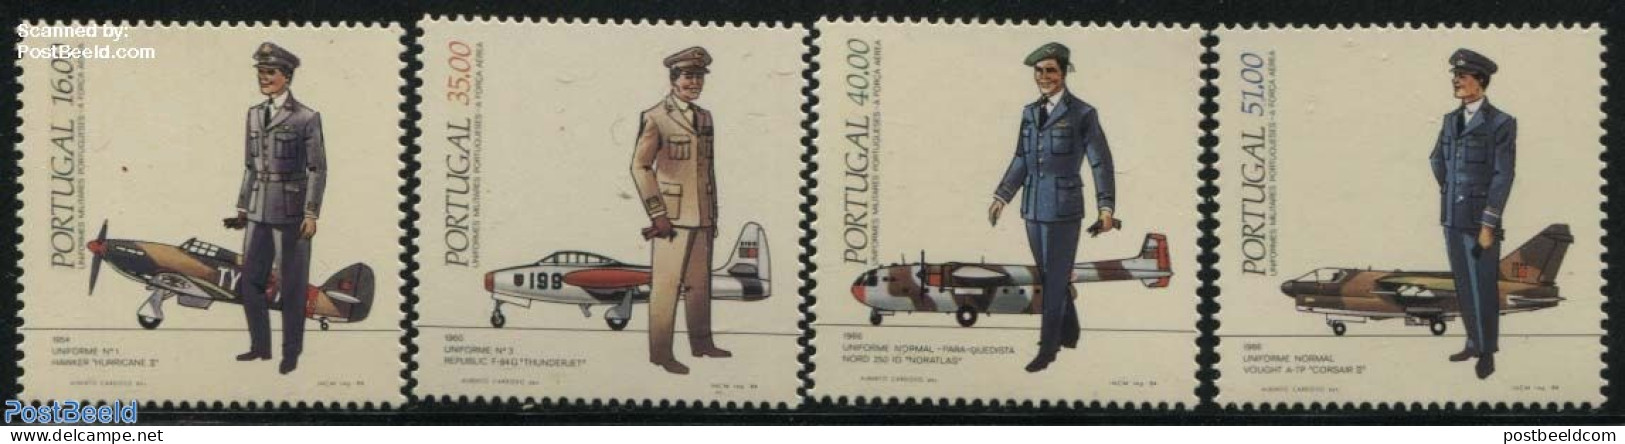 Portugal 1984 Uniforms & Aeroplanes 4v, Mint NH, Transport - Various - Aircraft & Aviation - Uniforms - Nuevos